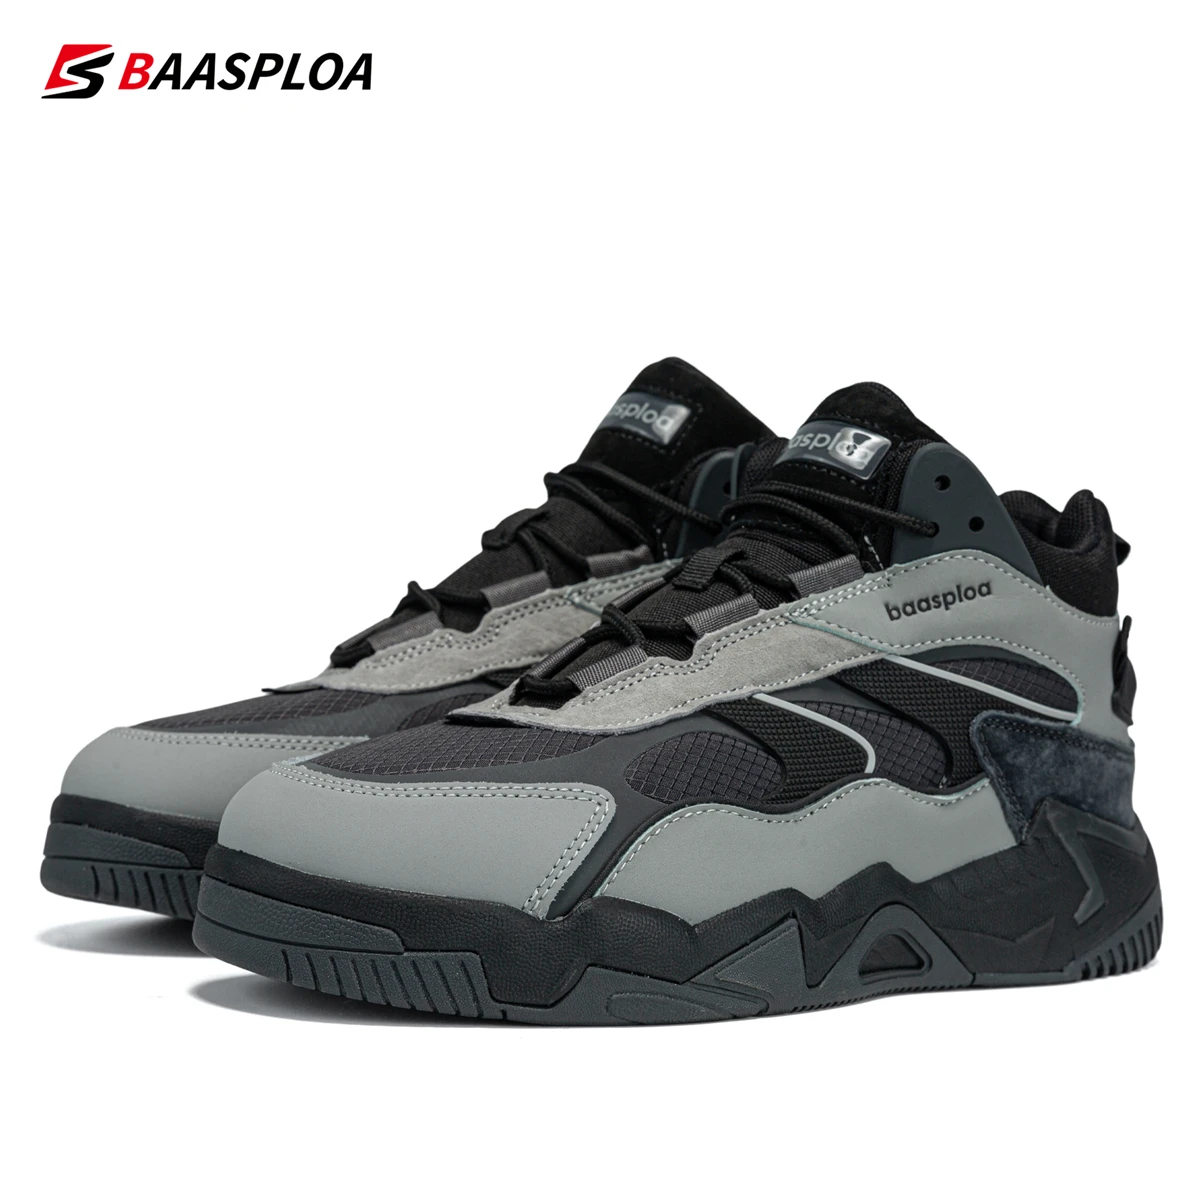 Baasploa Winter Men Leather Sneakers Casual Fashion Waterproof Sport Shoes For Man Plush Warm Male Sneakers Non-Slip Outdoor